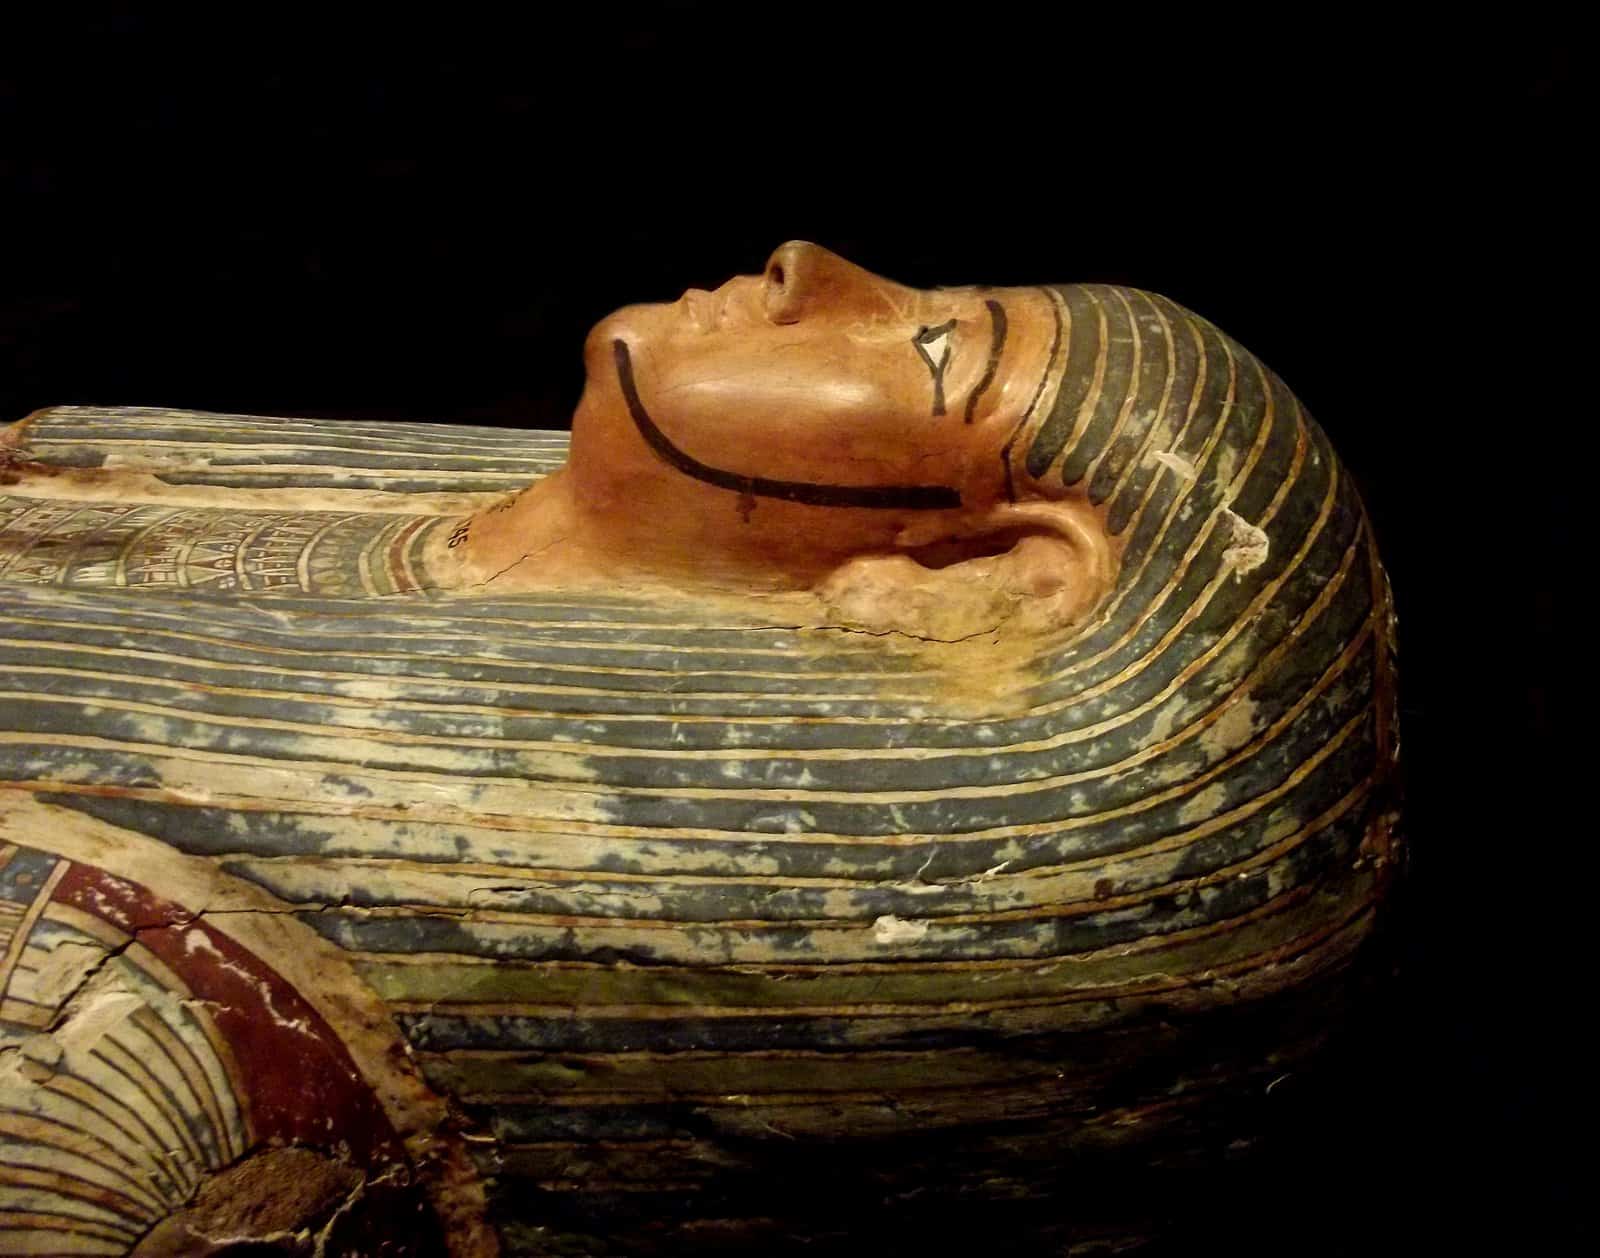 Mummification Explained for Kids